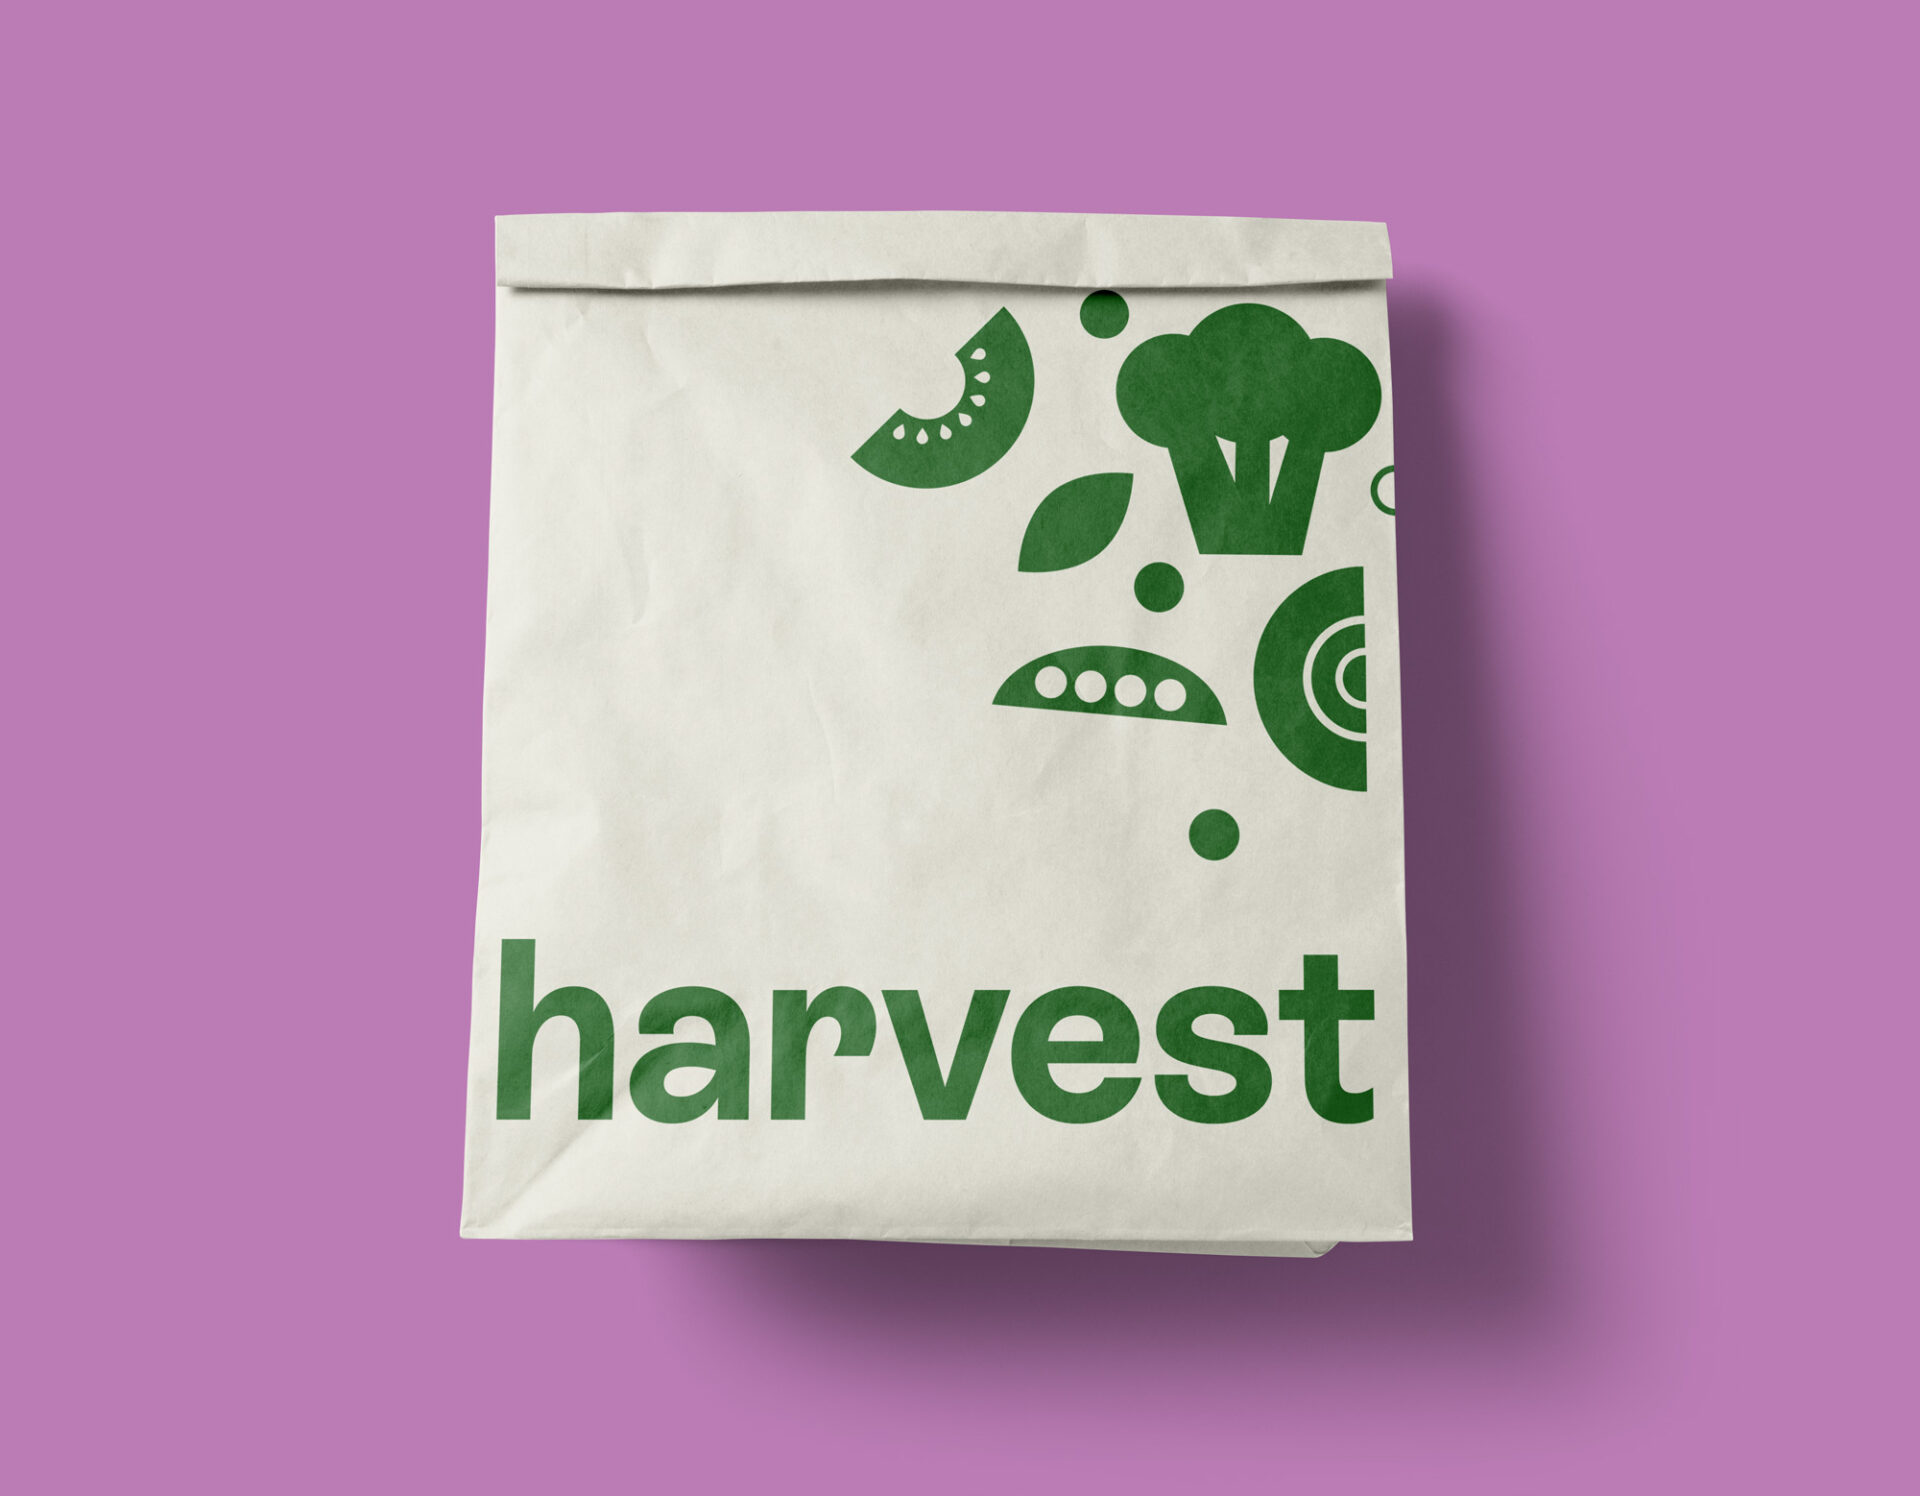 A to-go bag design for an organic salad company.